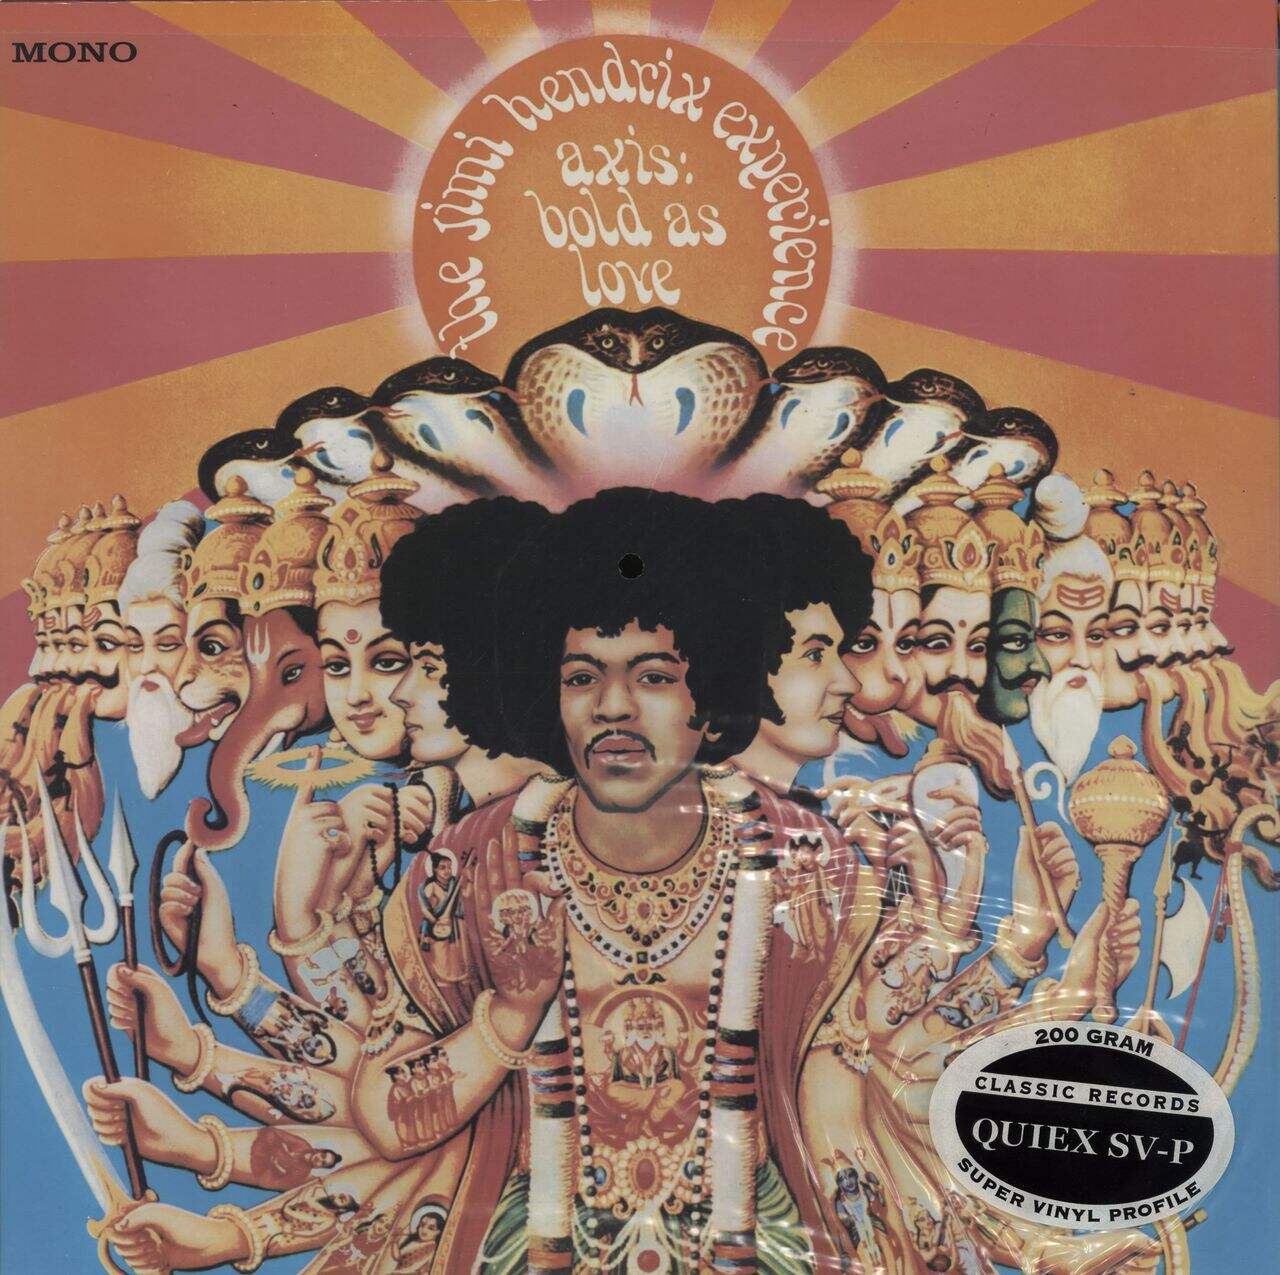 Jimi Hendrix Axis: Bold As Love - 200gm US Vinyl LP